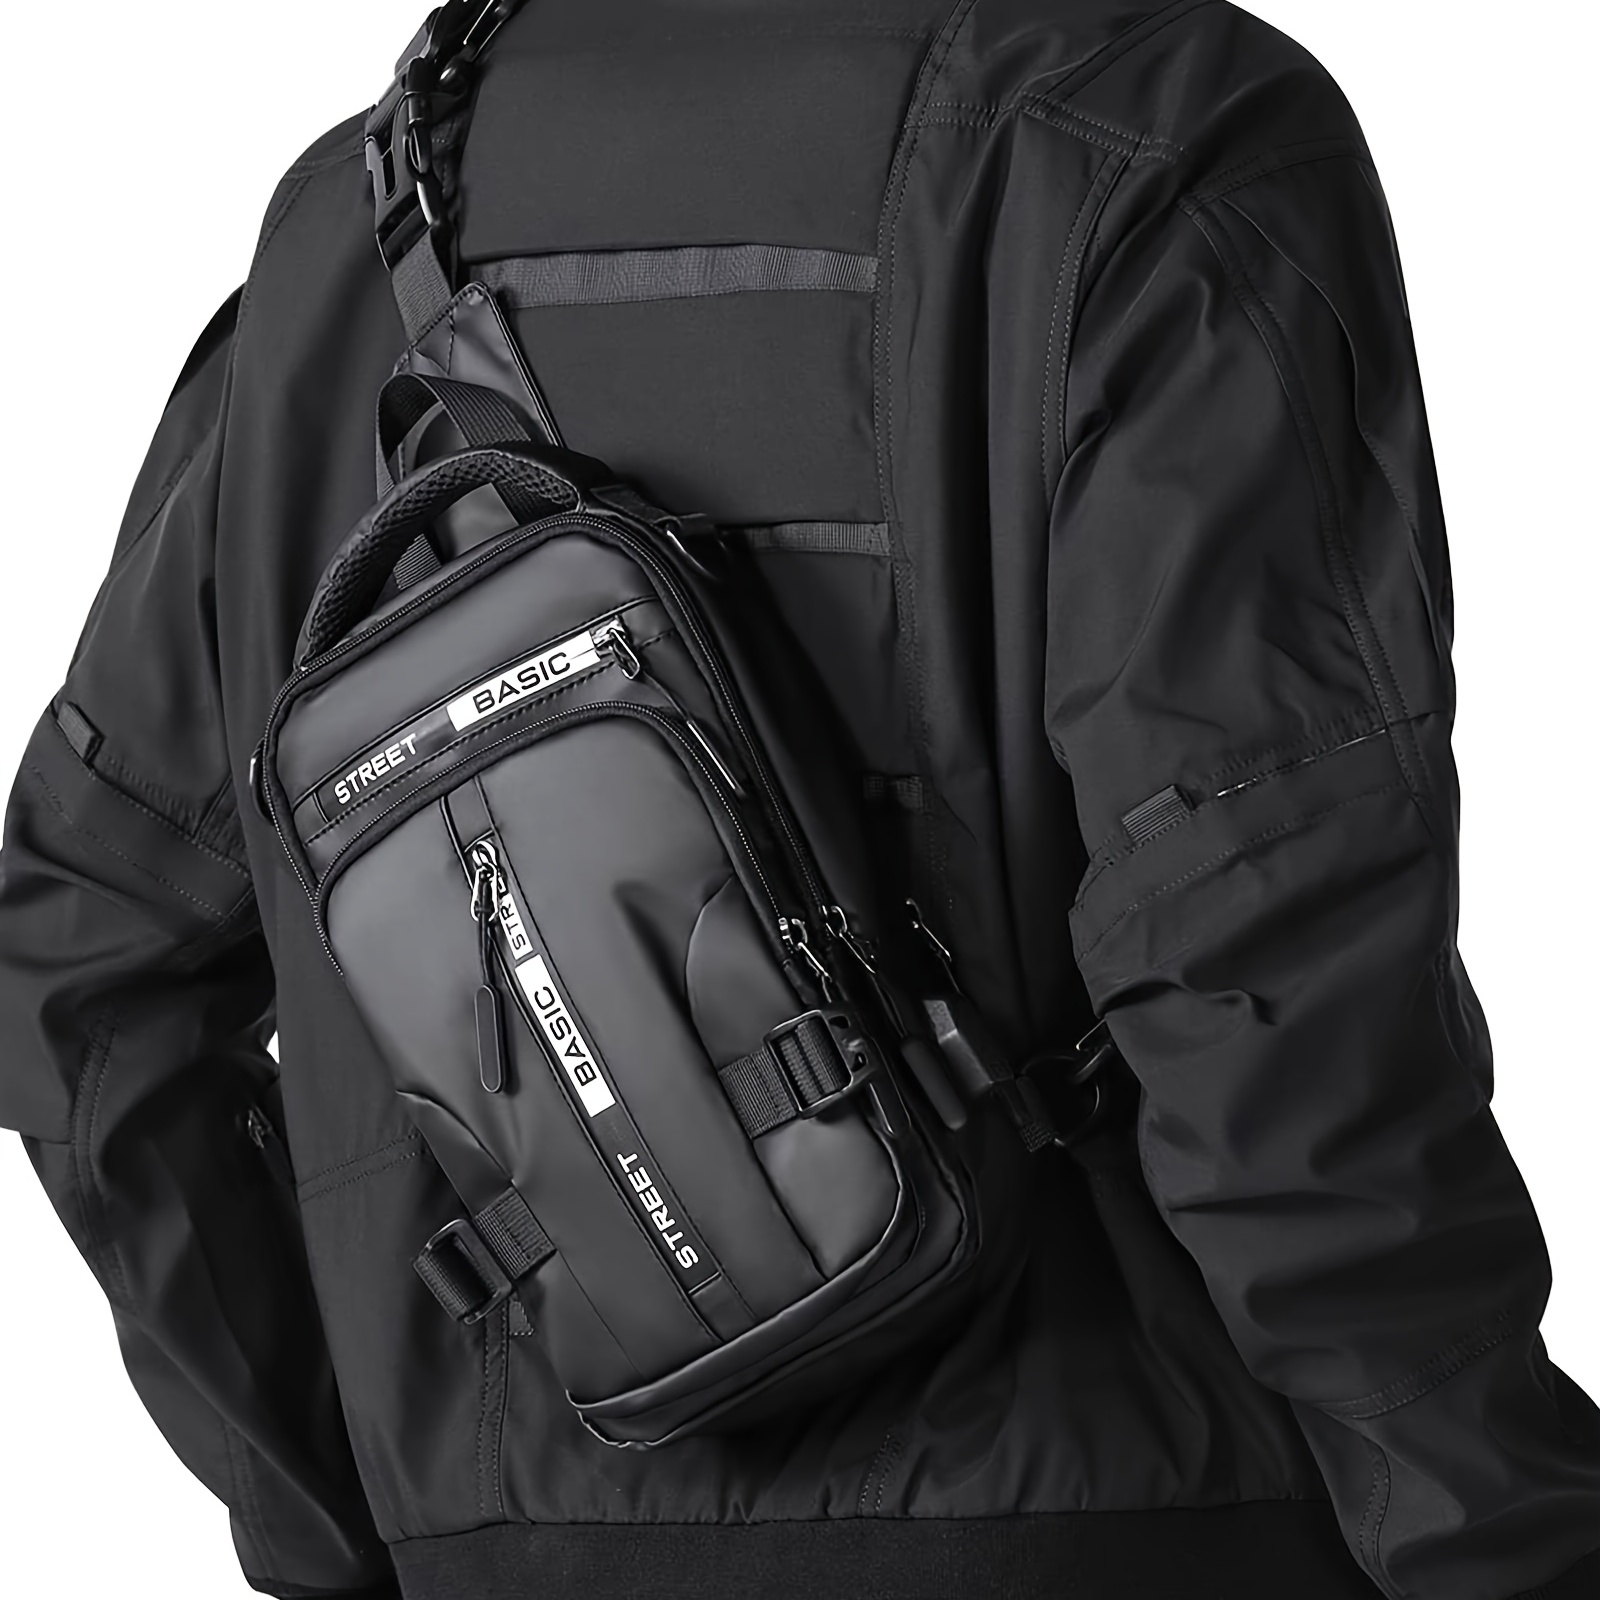 Waterfly Crossbody Sling Backpack Daypack: White Black Sling Bag Travel  Hiking Walking Antitheft Chest Bag For Man Woman